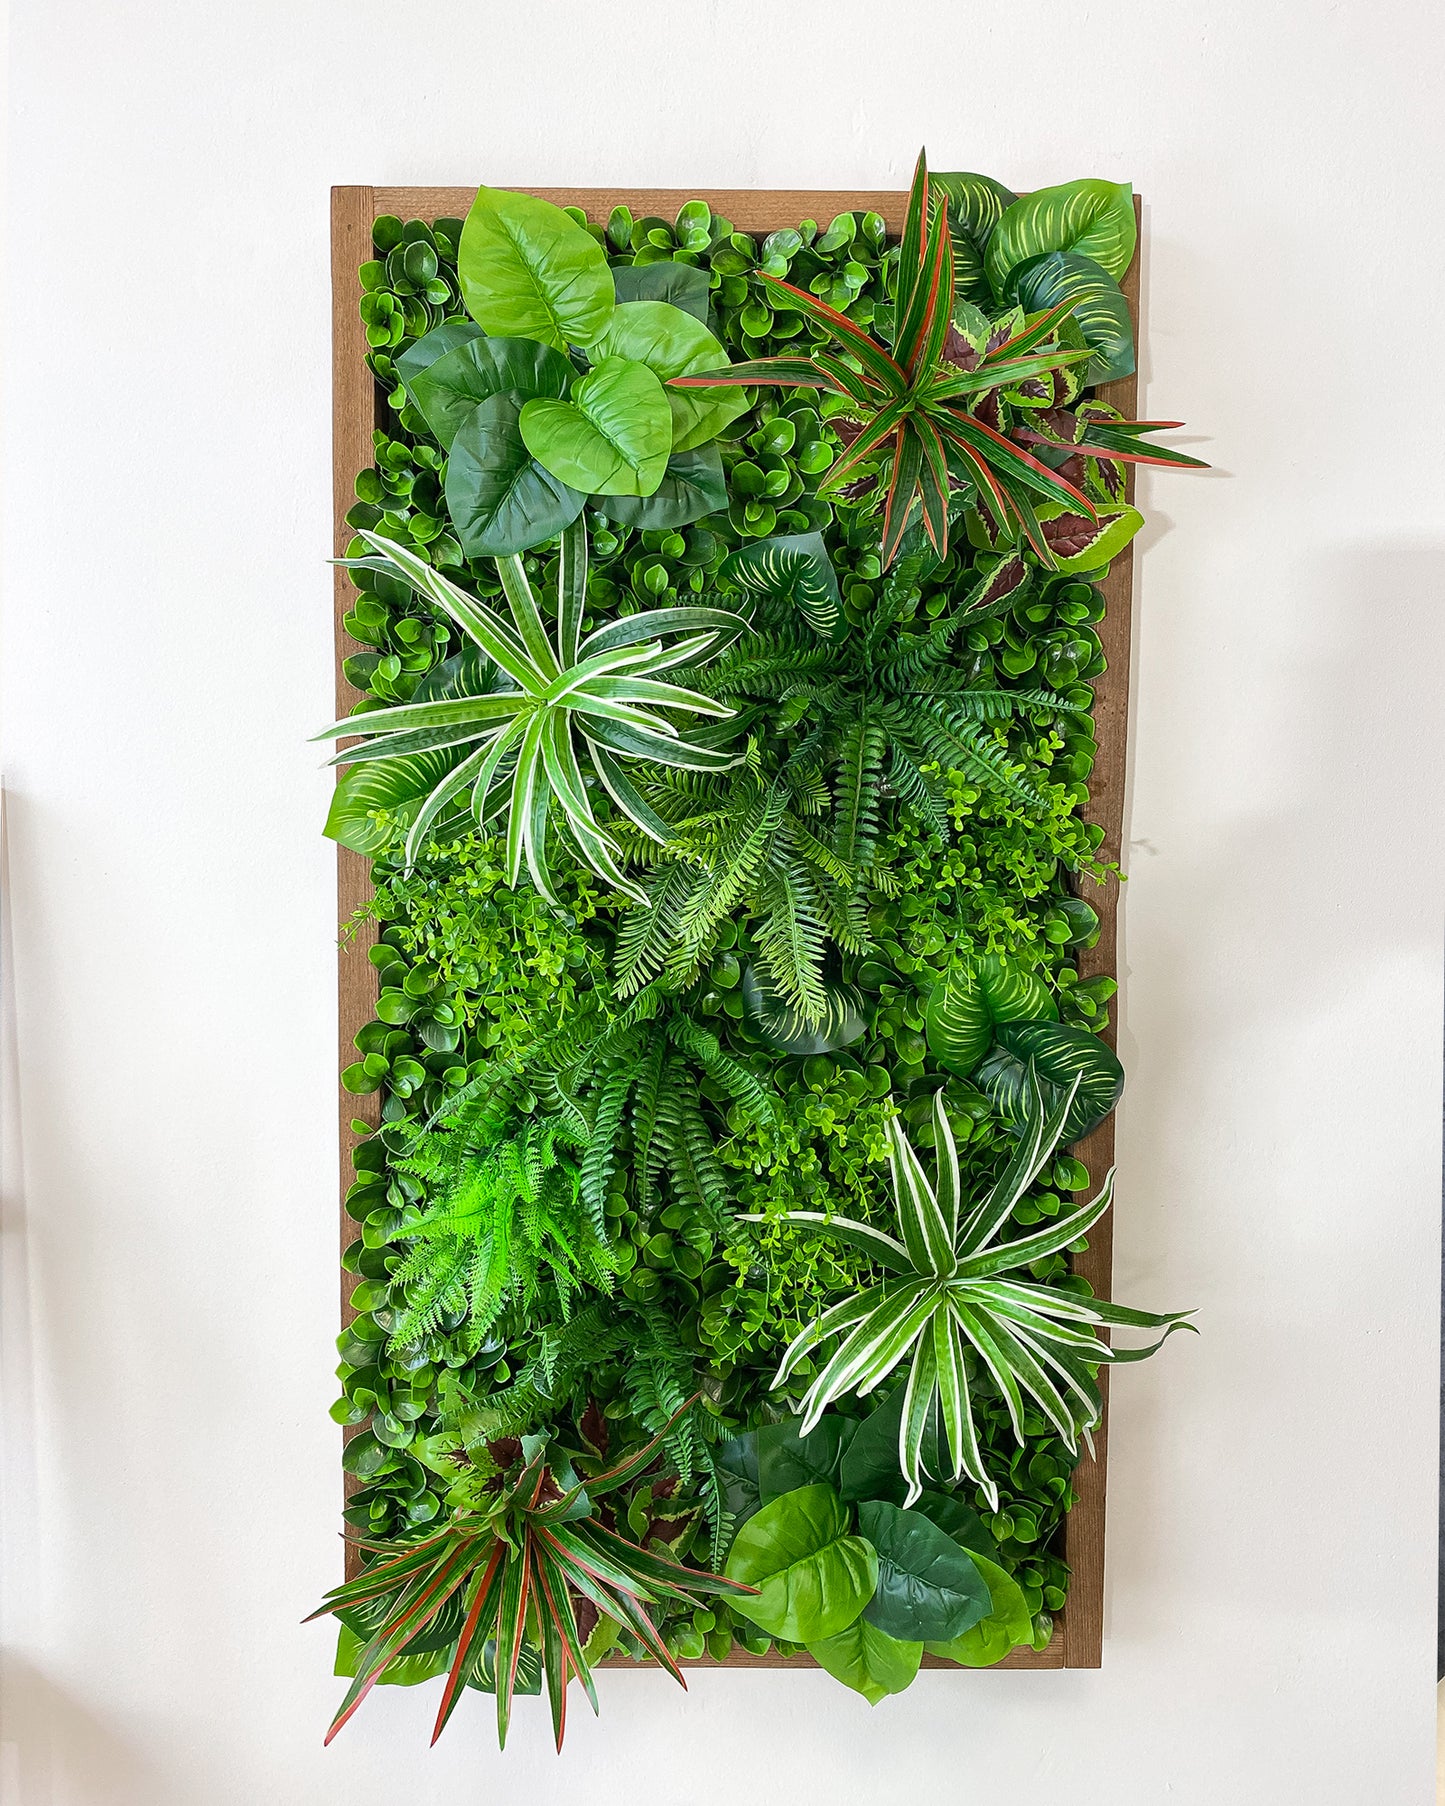 Plantframe/Pflanzenwand/Mooswand "YUCATAN" aus Realtouch Kunstpflanzen in Fichtenholzrahmen